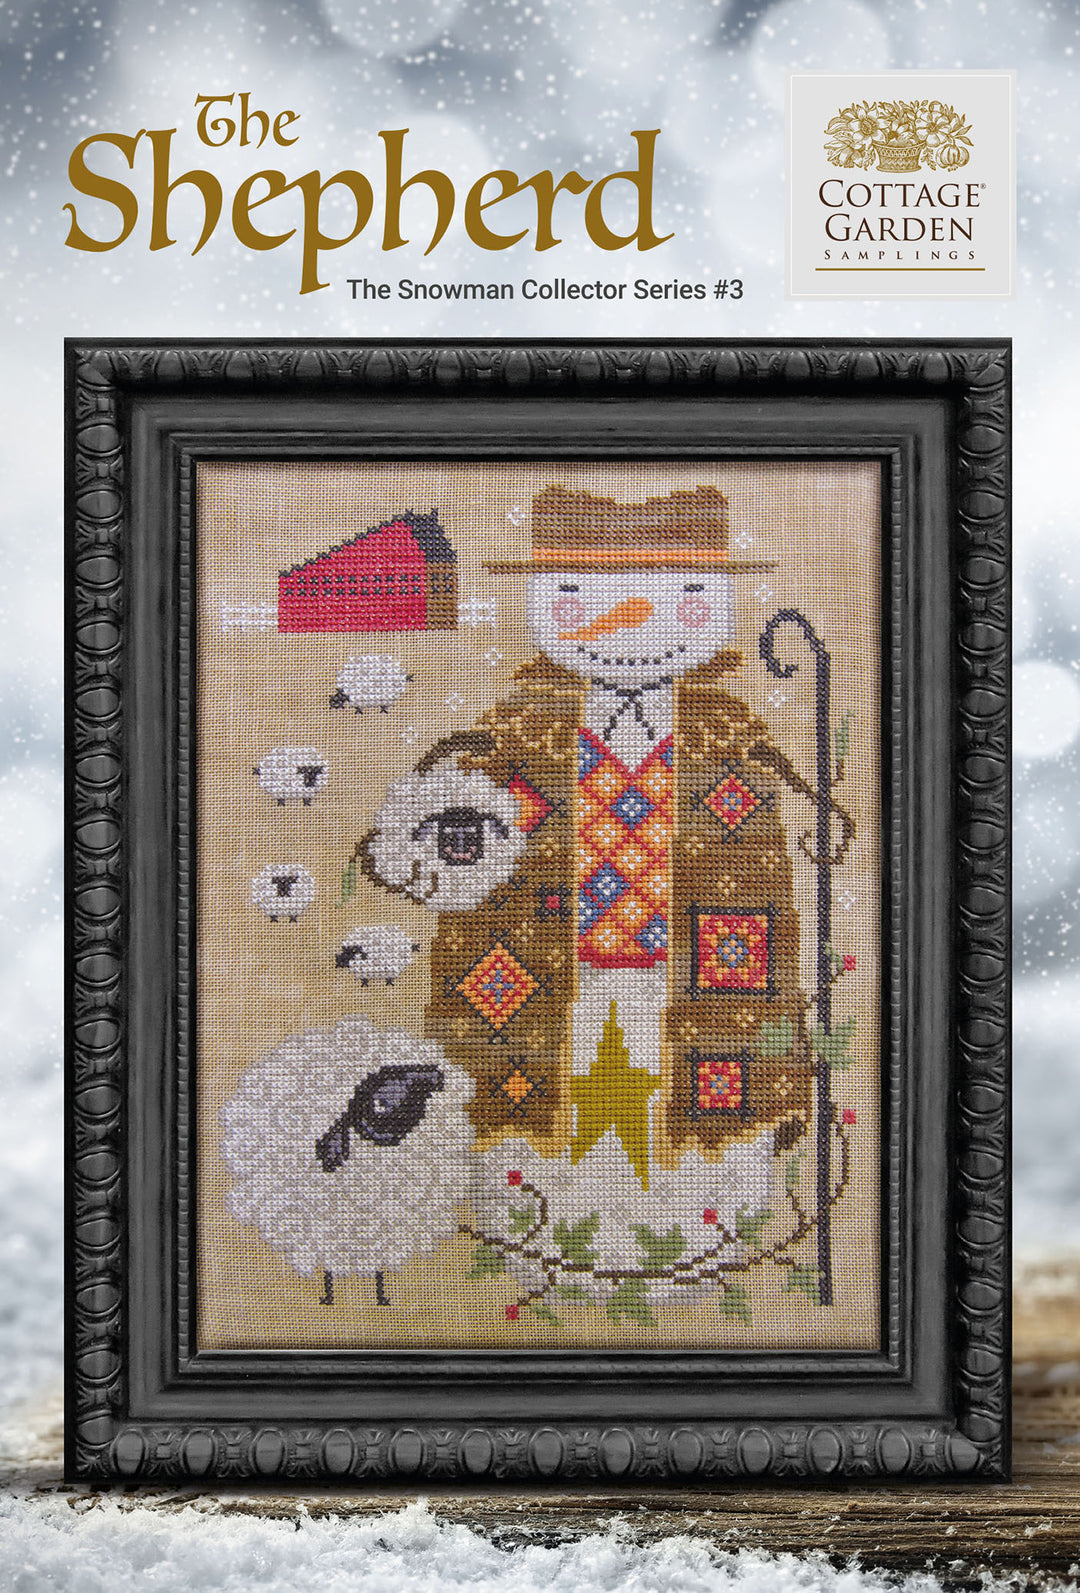 The Shepherd - Snowman Collector Series #3 | Cottage Garden Samplings